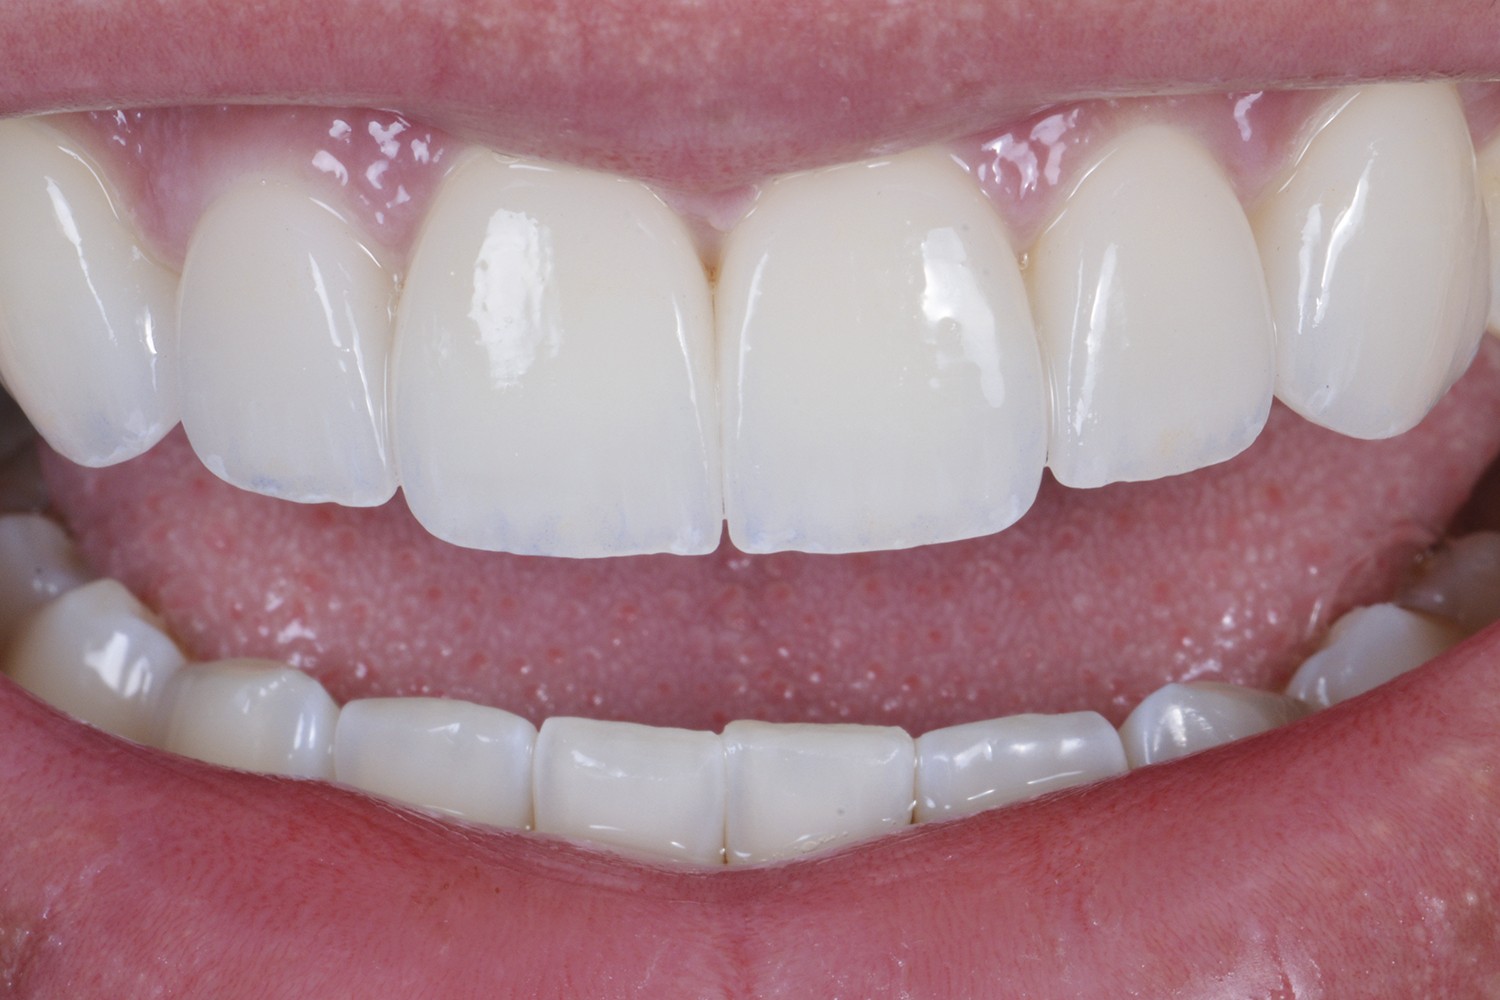 Clareamento dental associado a facetas cerâmicas minimamente invasivas: relato de caso clínico